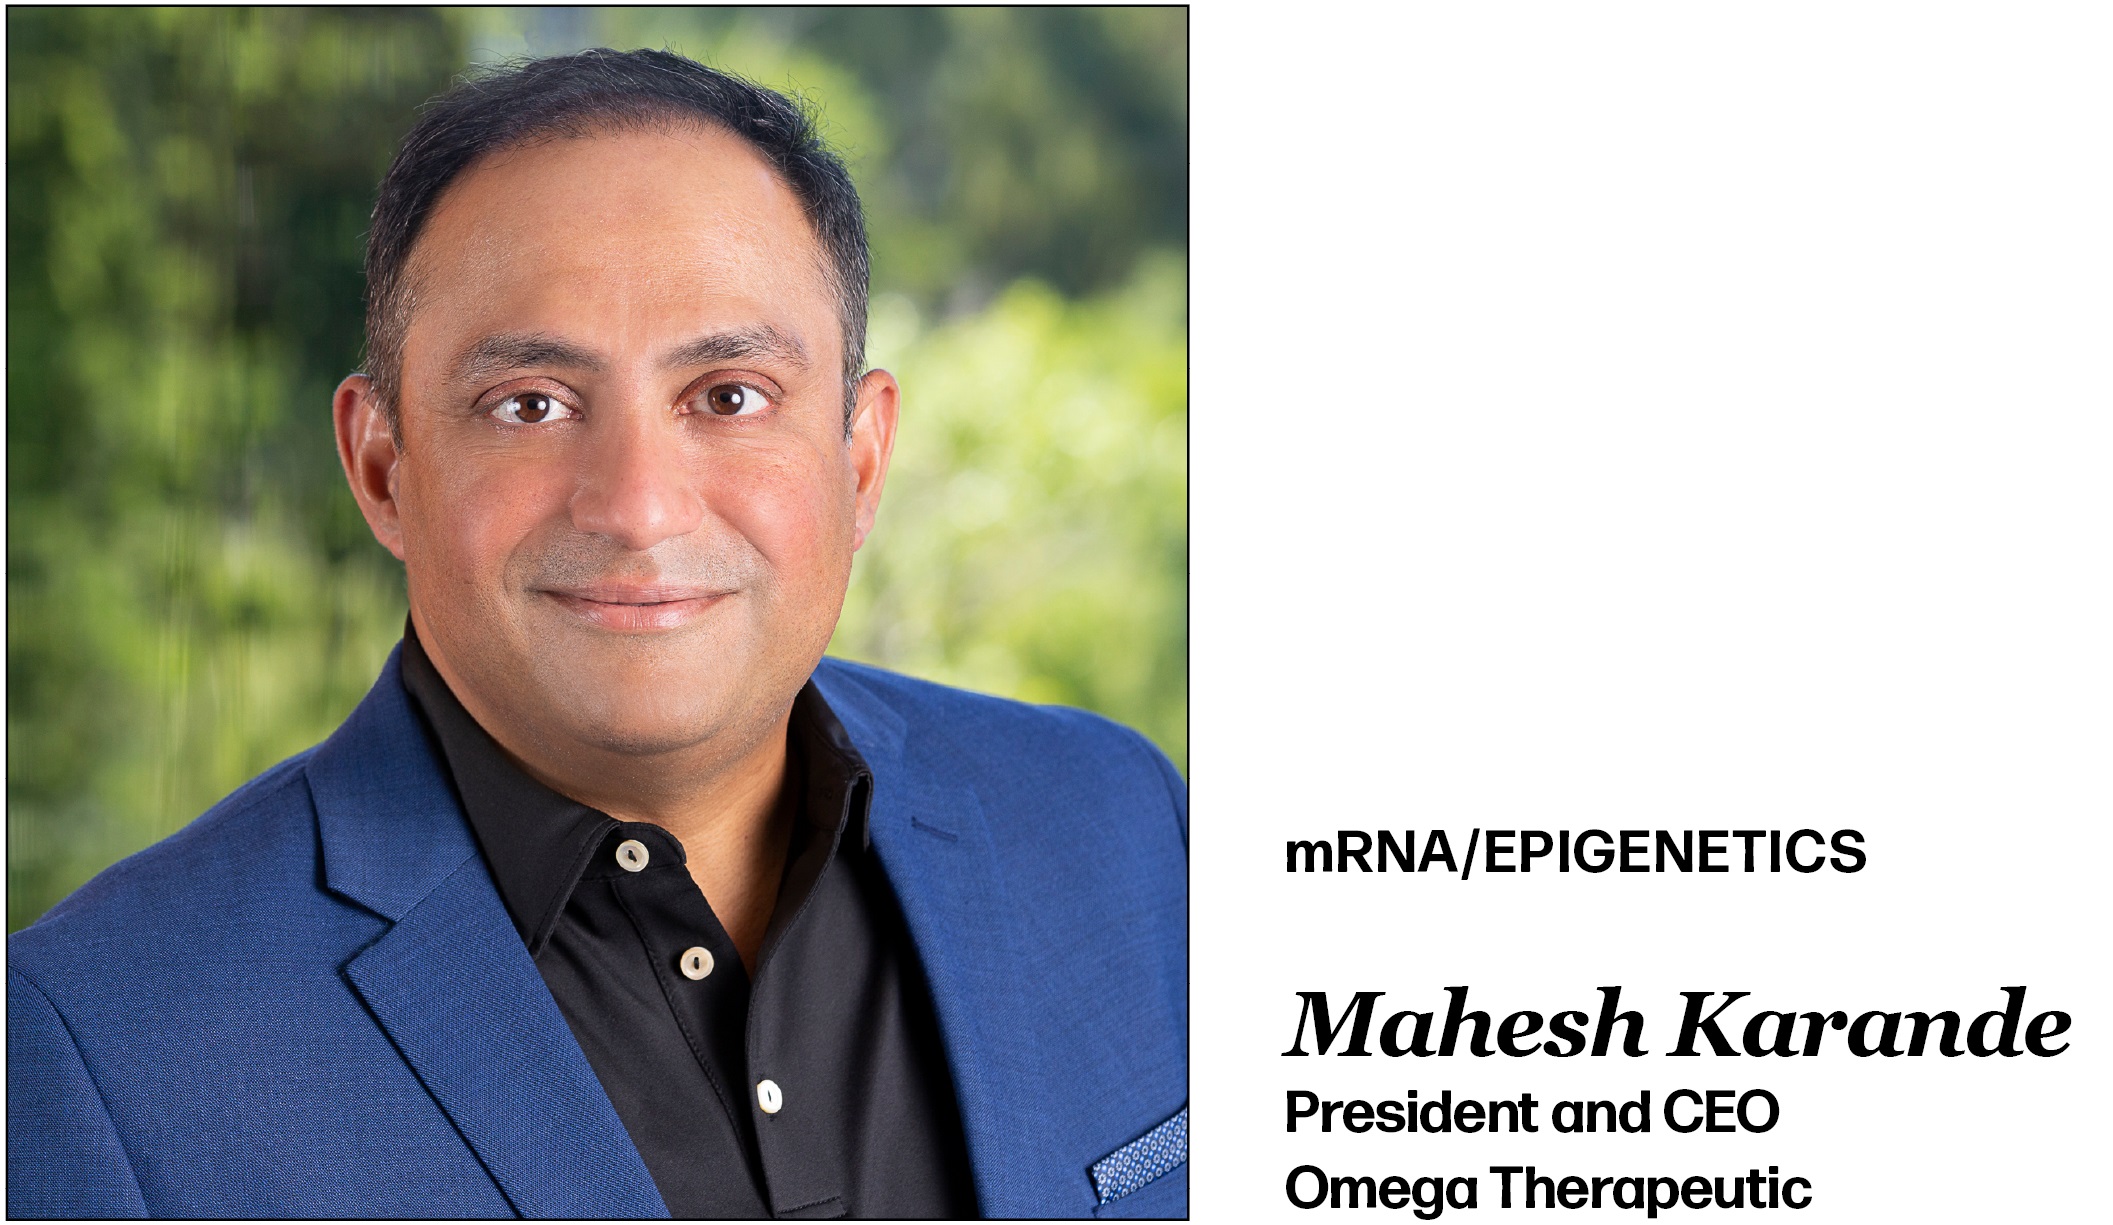 mRNA/Epigenetics Mahesh Karande President and CEO Omega Therapeutic